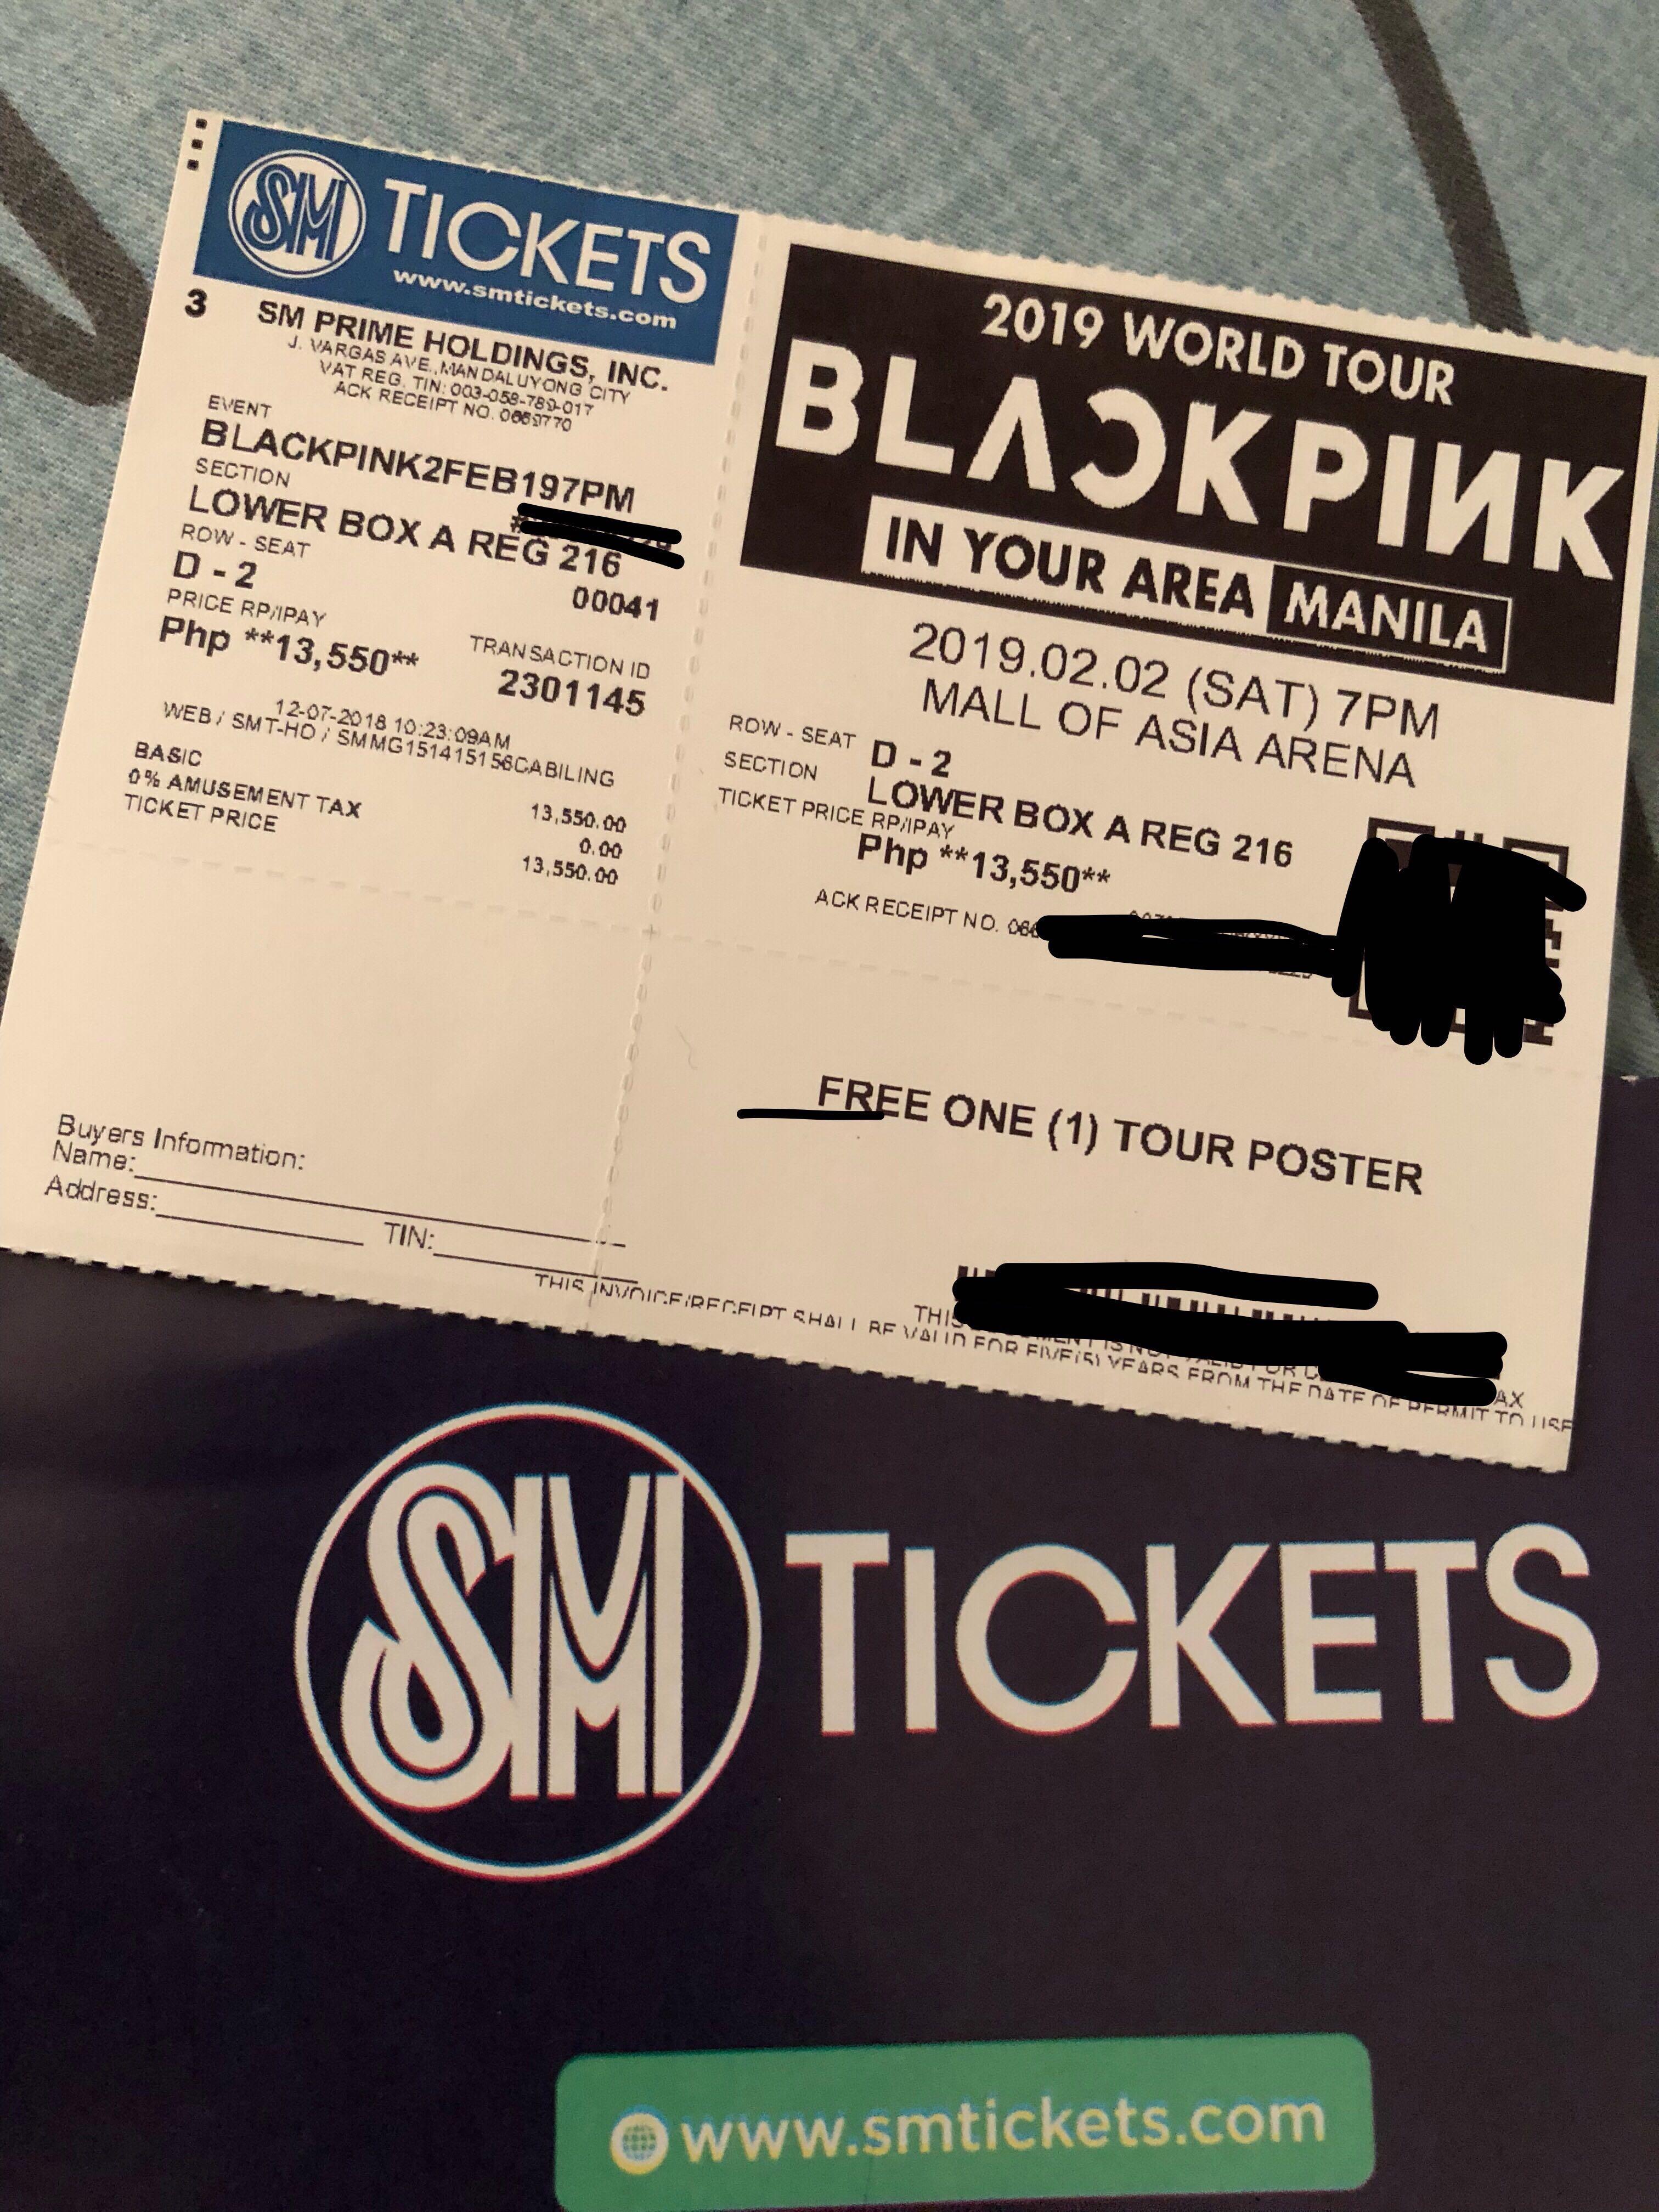 BlackPink concert ticket, Tickets & Vouchers, Event Tickets on Carousell